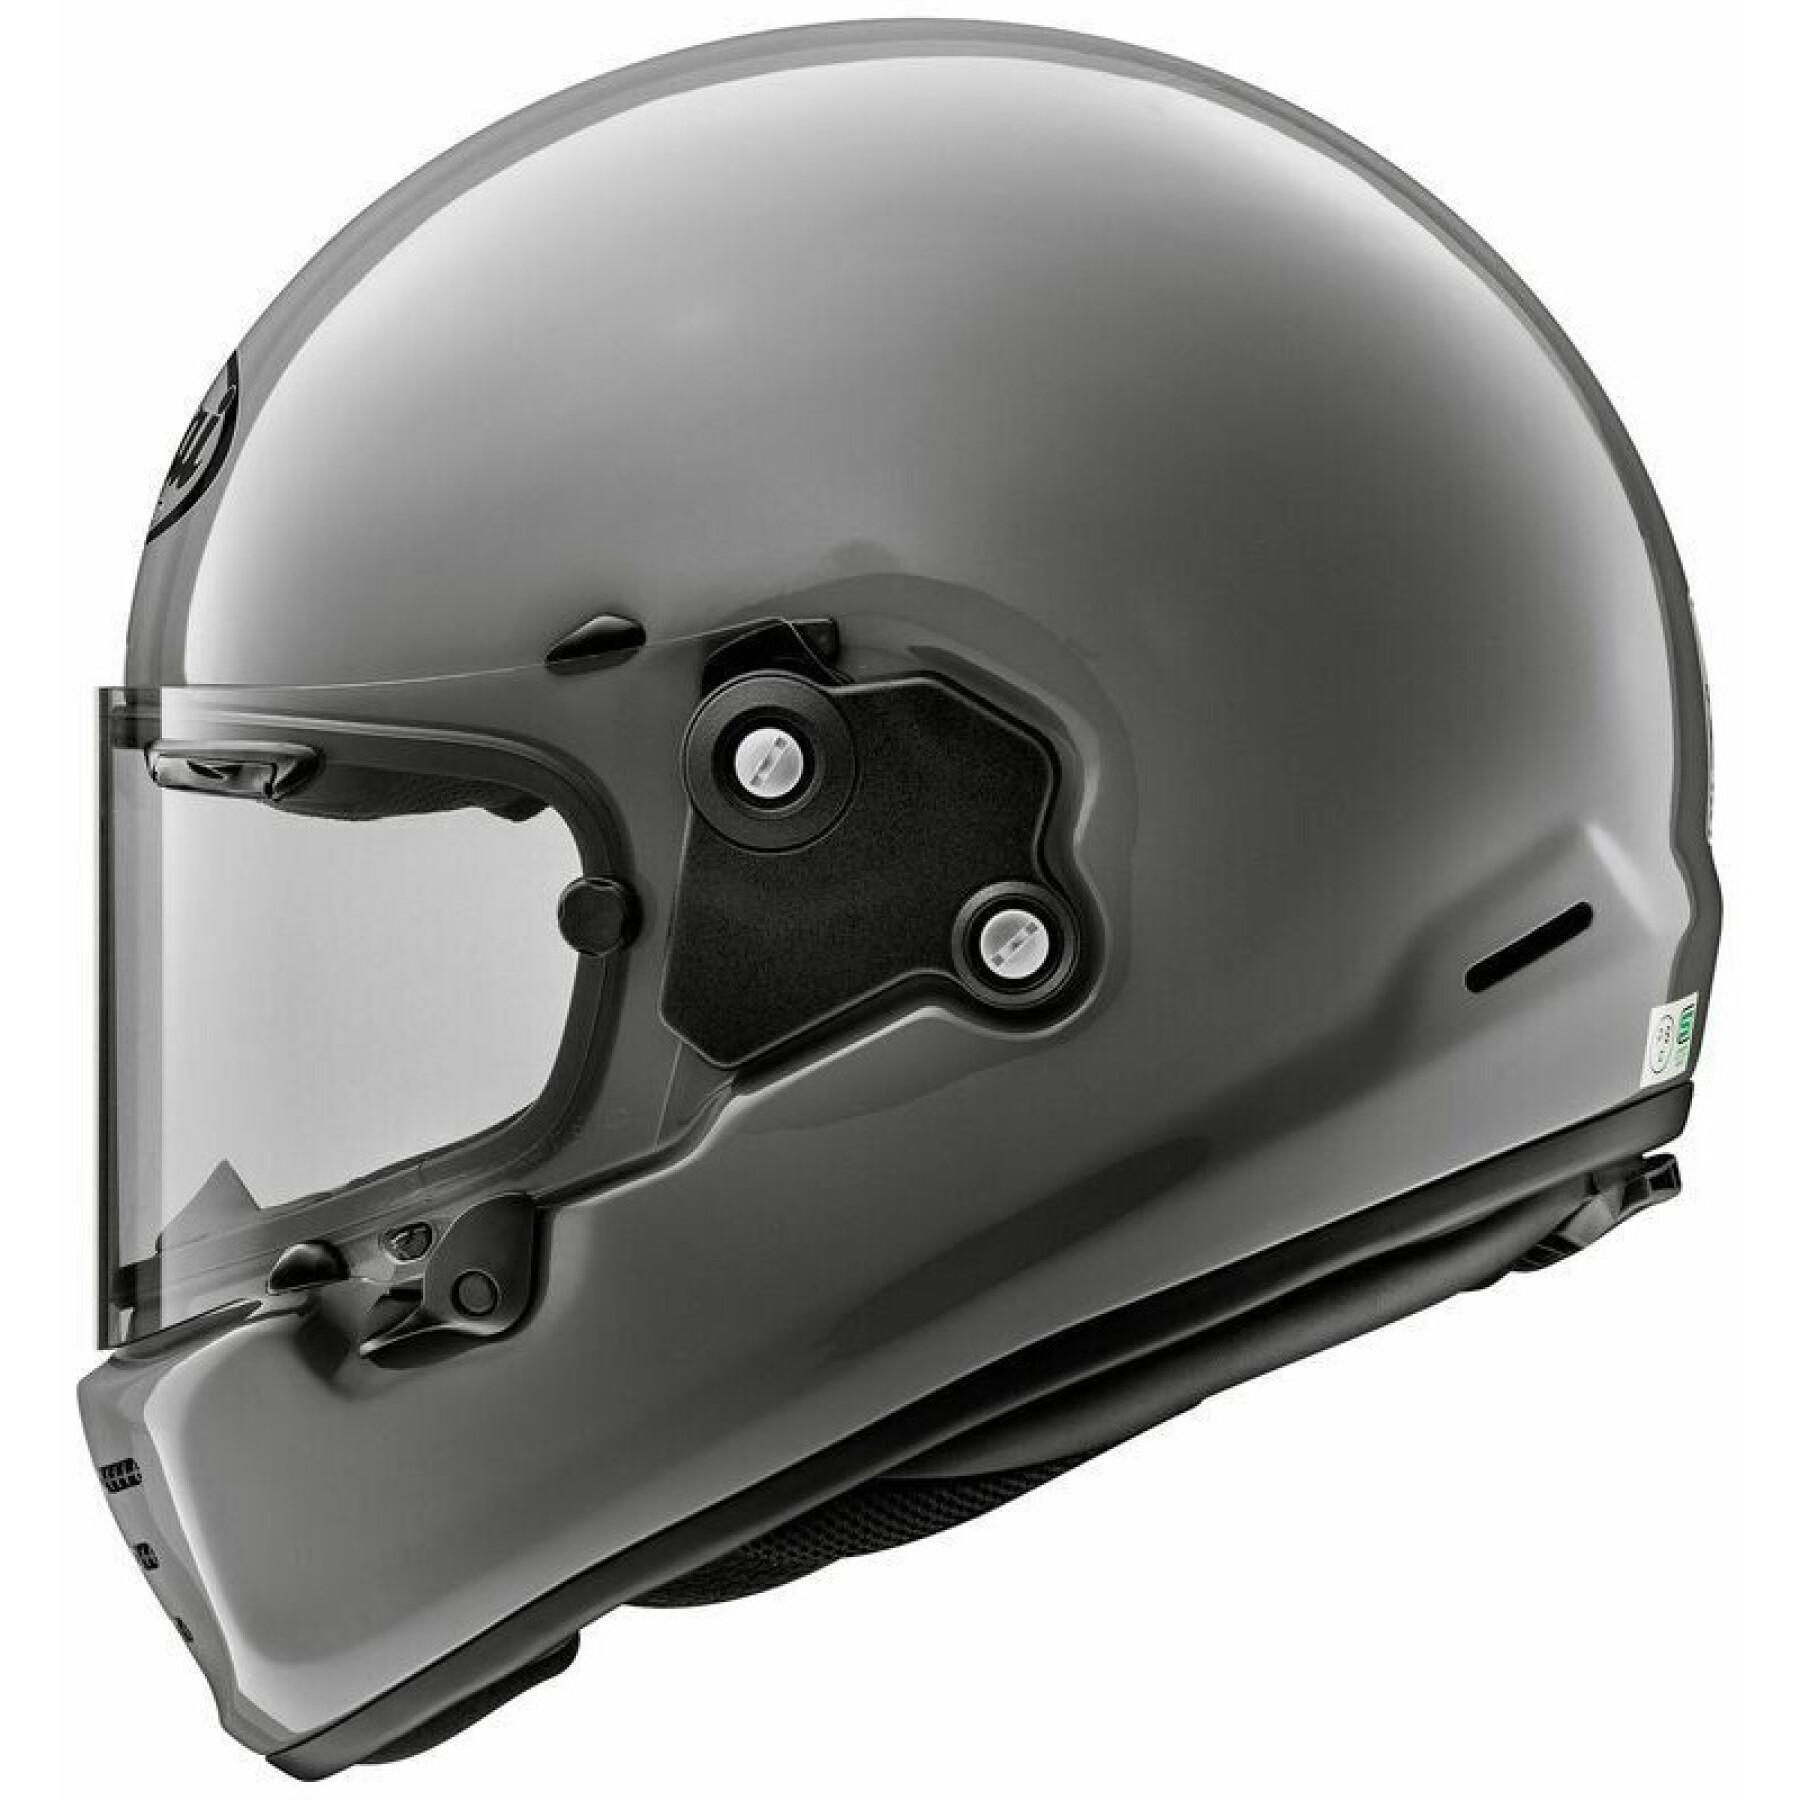 Full face motorcycle helmet Arai Concept-XE